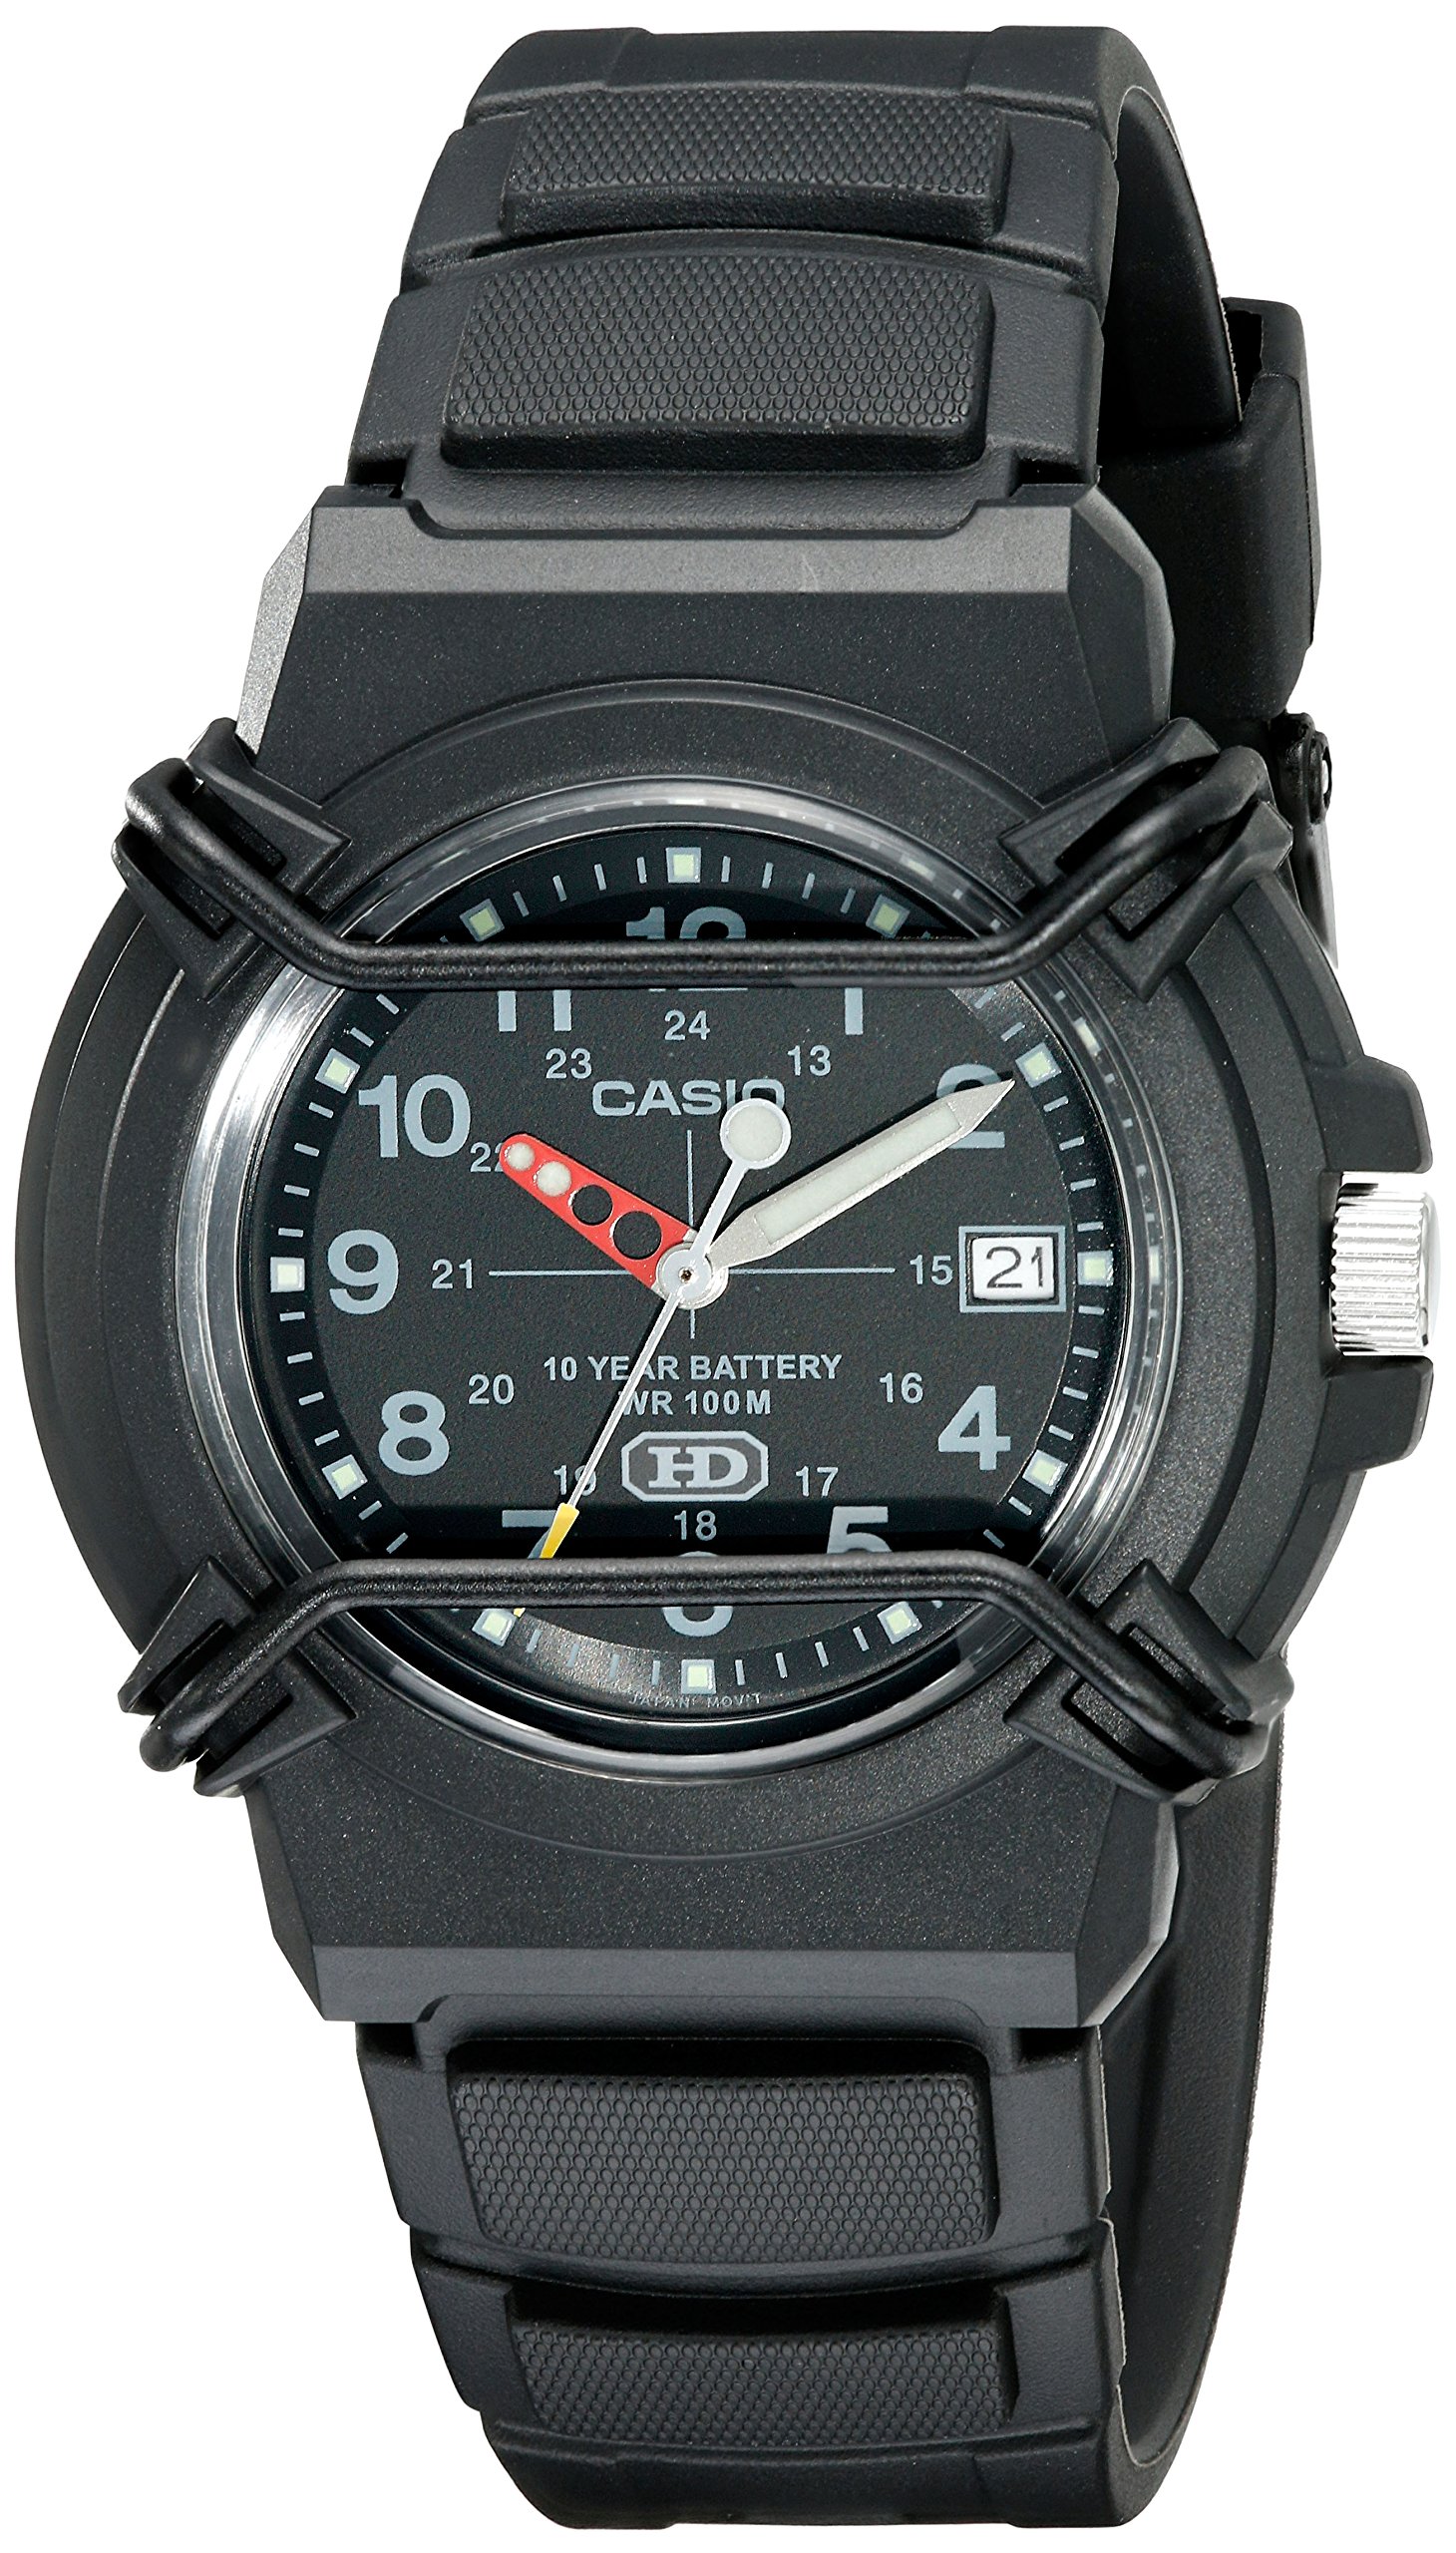 CASIO Men's HDA600B-1BV 10-Year Battery Sport Watch $17.54